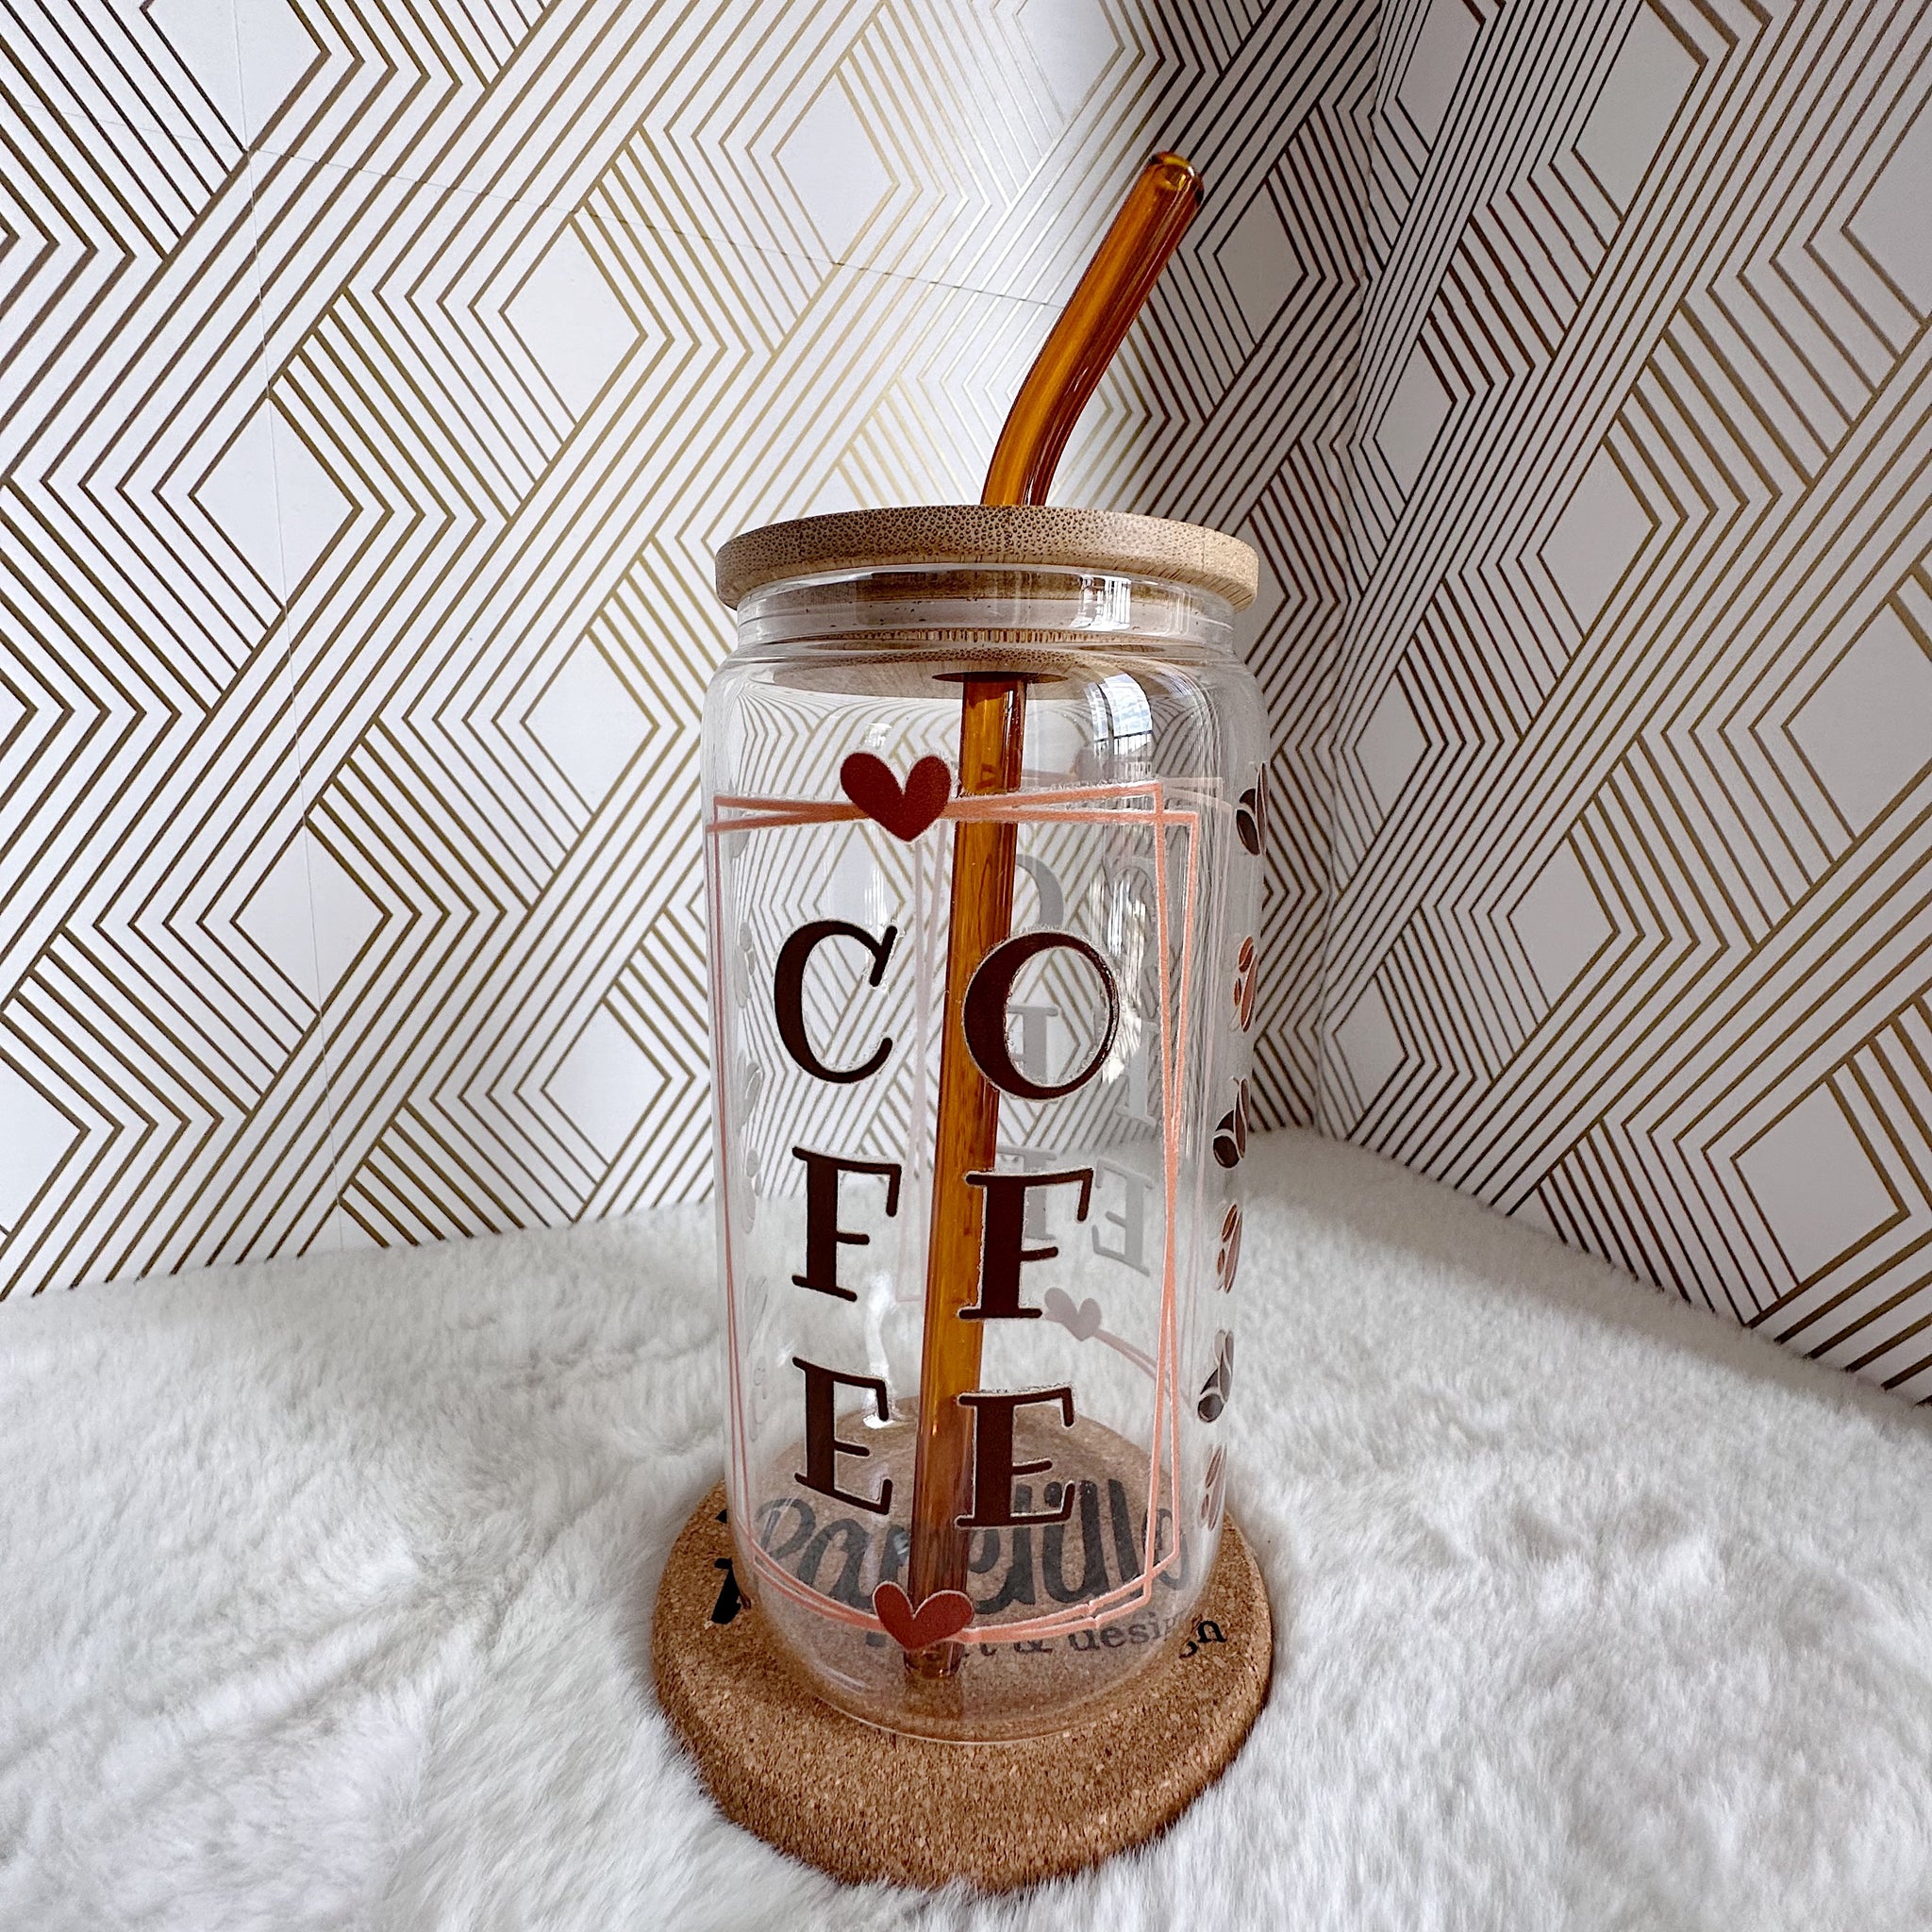 Coffee is Always a Good Idea Mason Jar Straw Cup, Iced Coffee Lover Gift,  Glass Mason Jar Tumbler, Reusable Iced Coffee to Go Tumbler Cup 